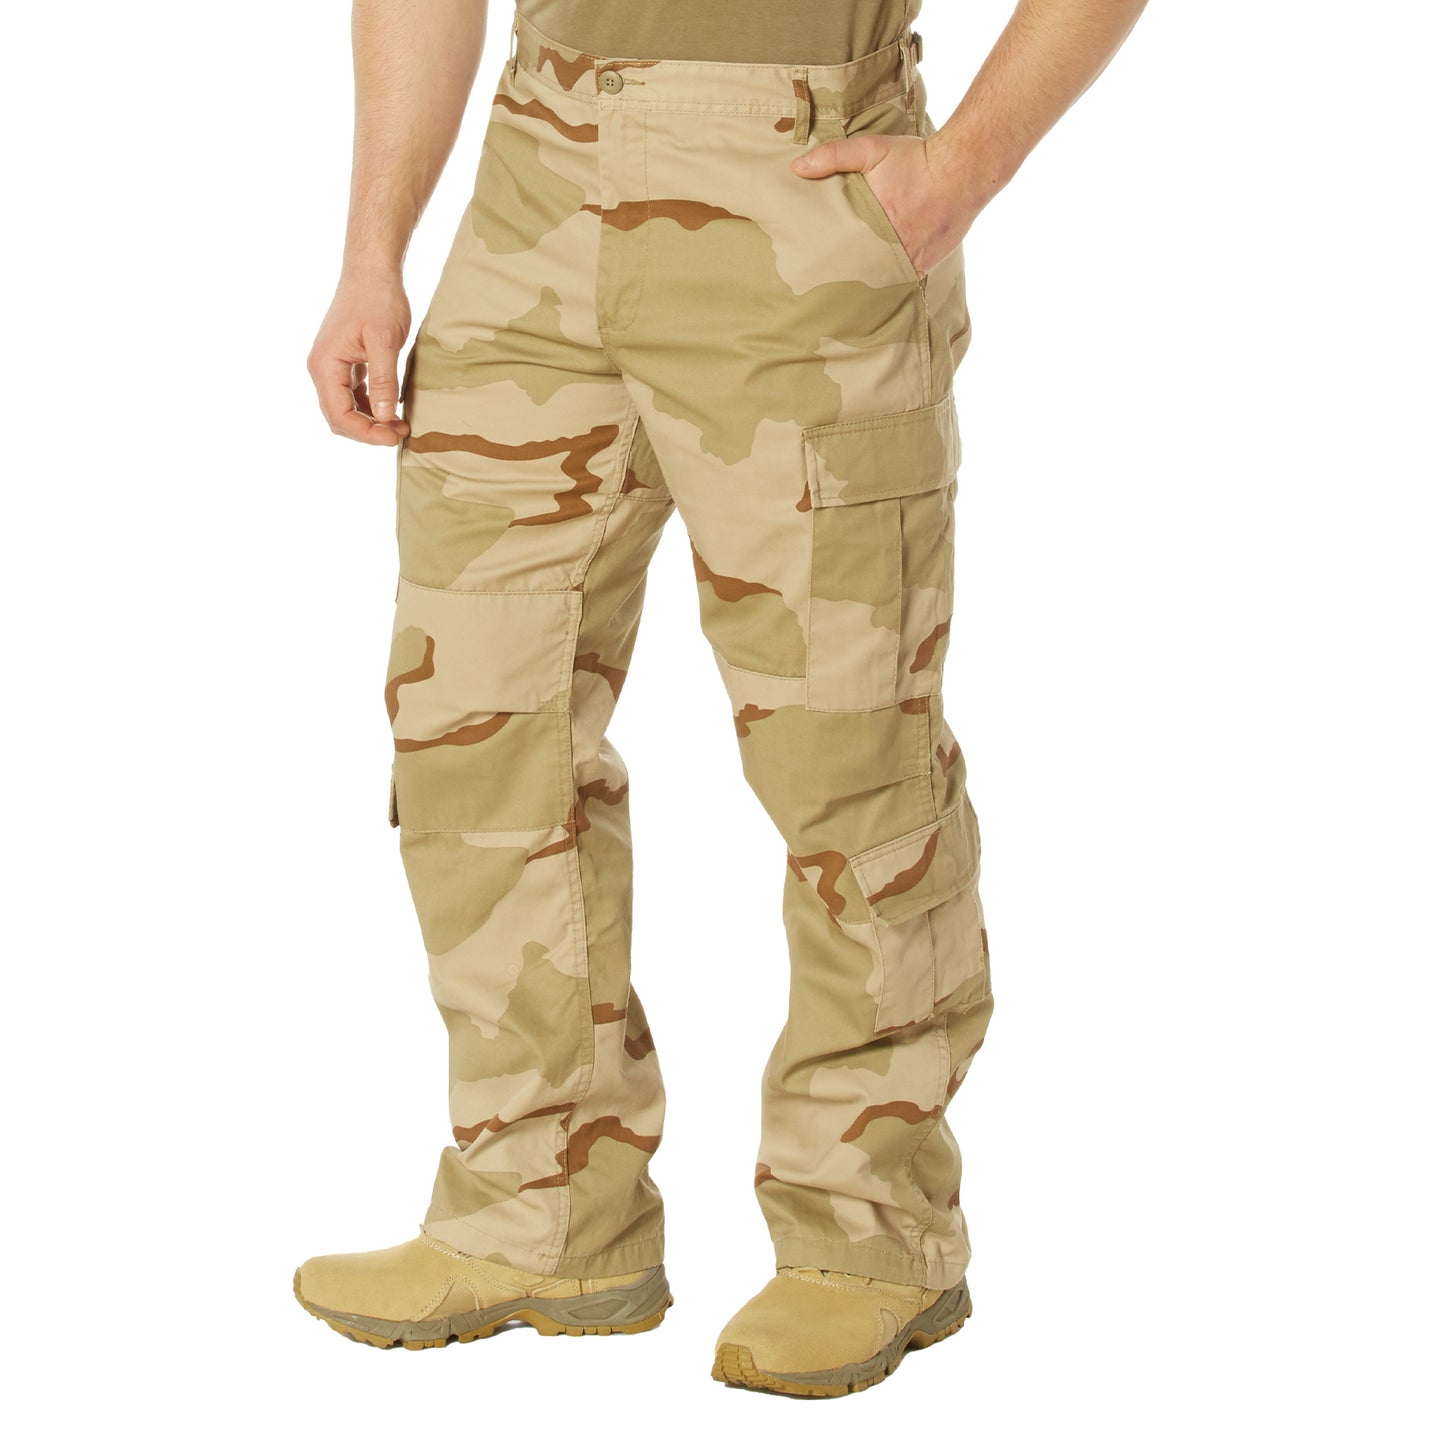 Rothco Vintage Camo Paratrooper Fatigue Pants - Tri Color Desert Camo